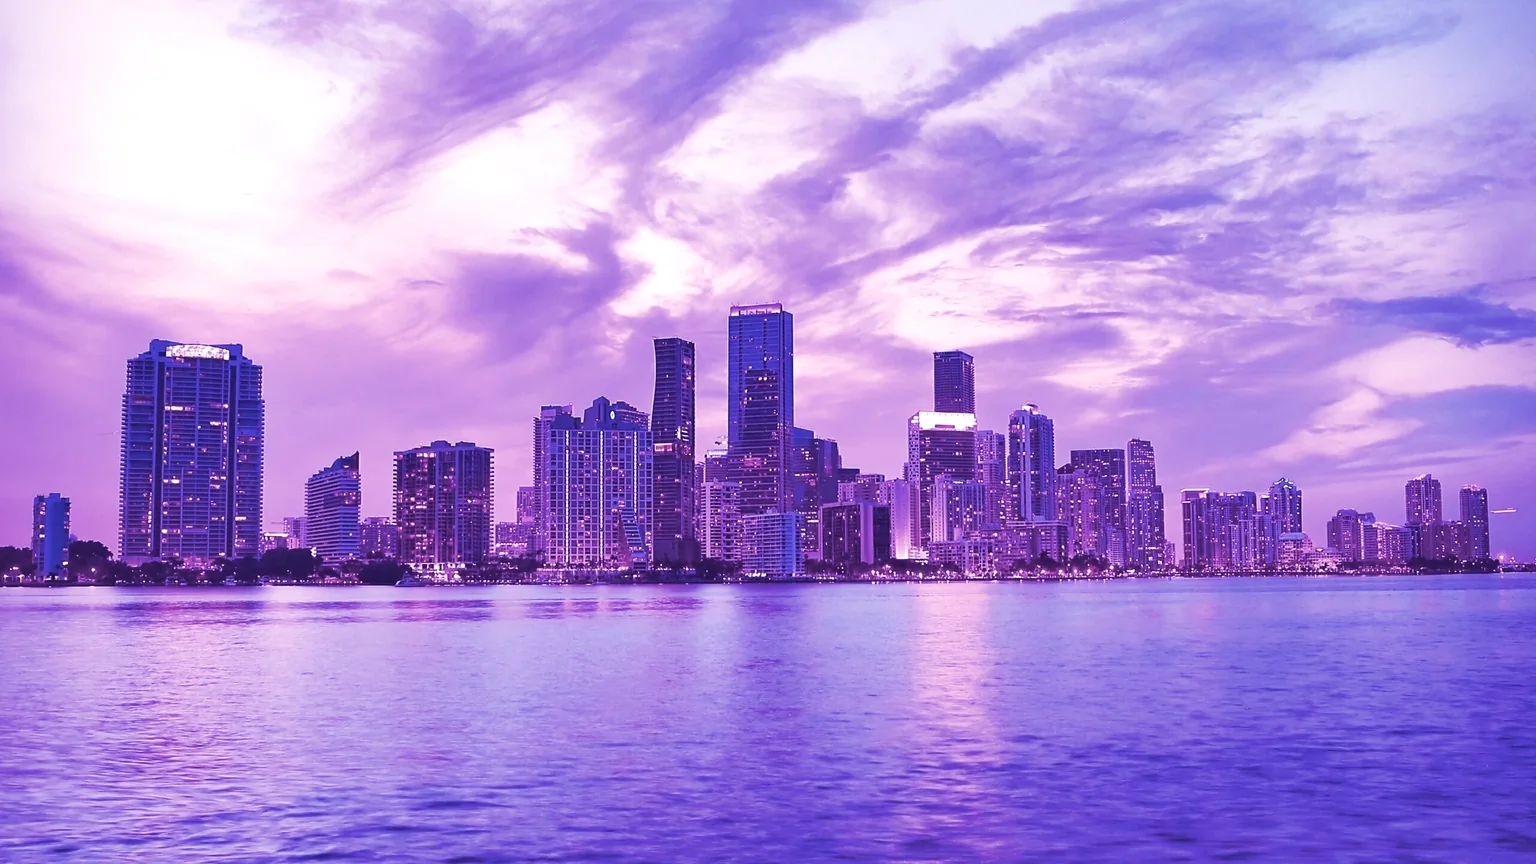 A view of Miami. Image: Muzammil Soorma on Unsplash.